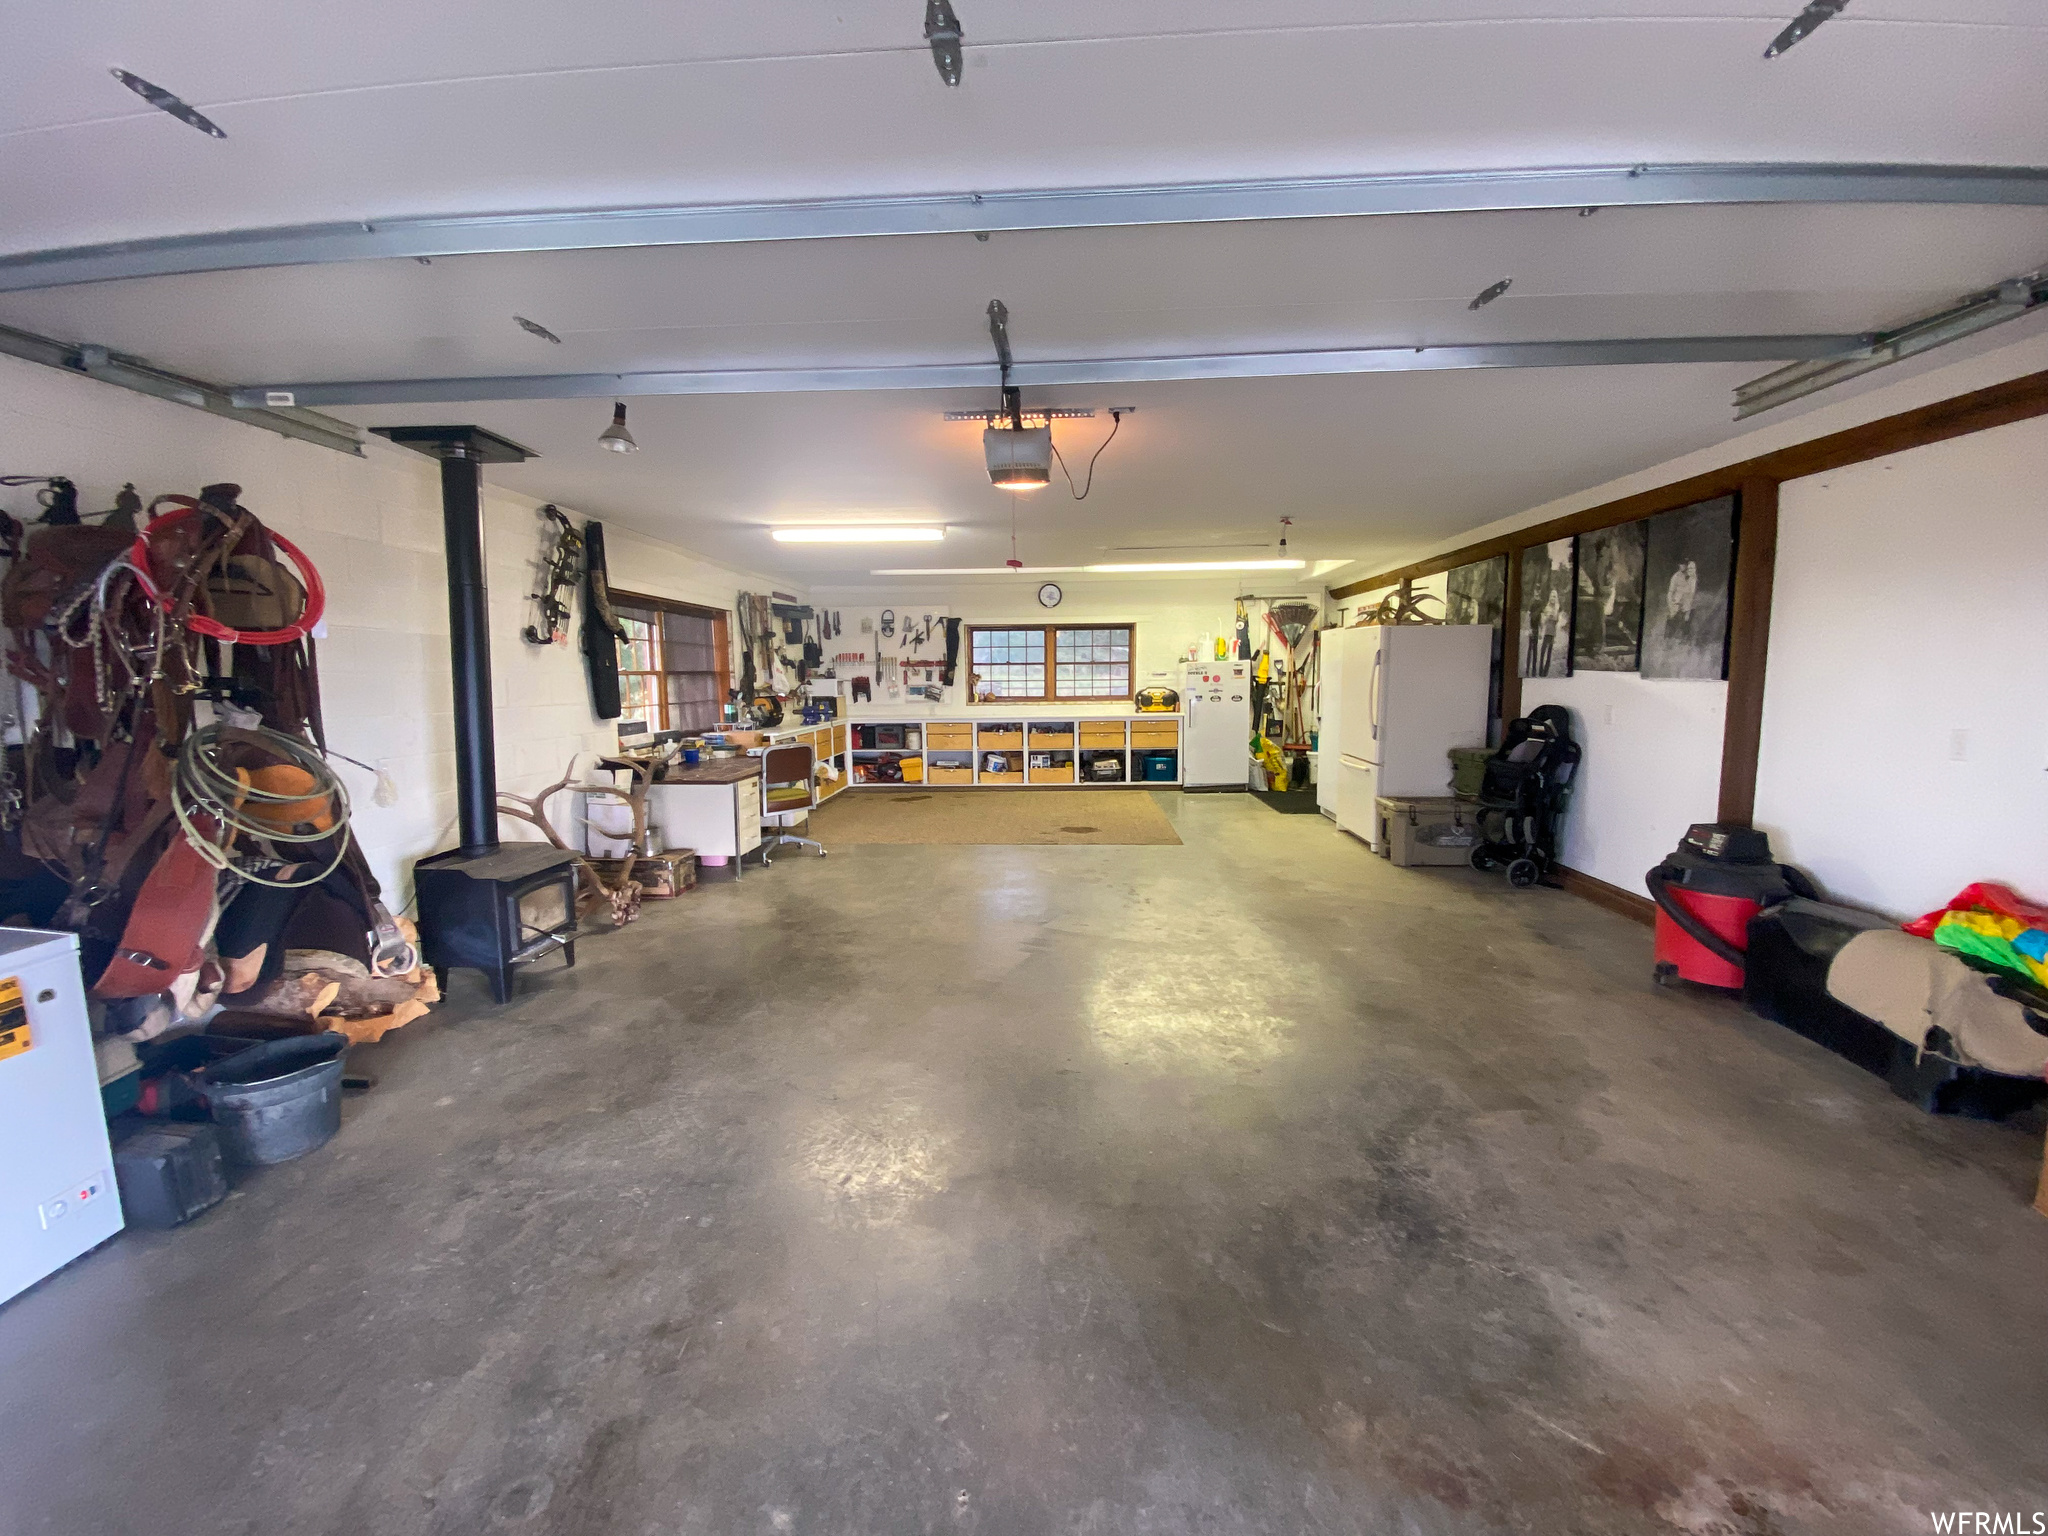 Garage with a garage door opener, a workshop area, and white fridge